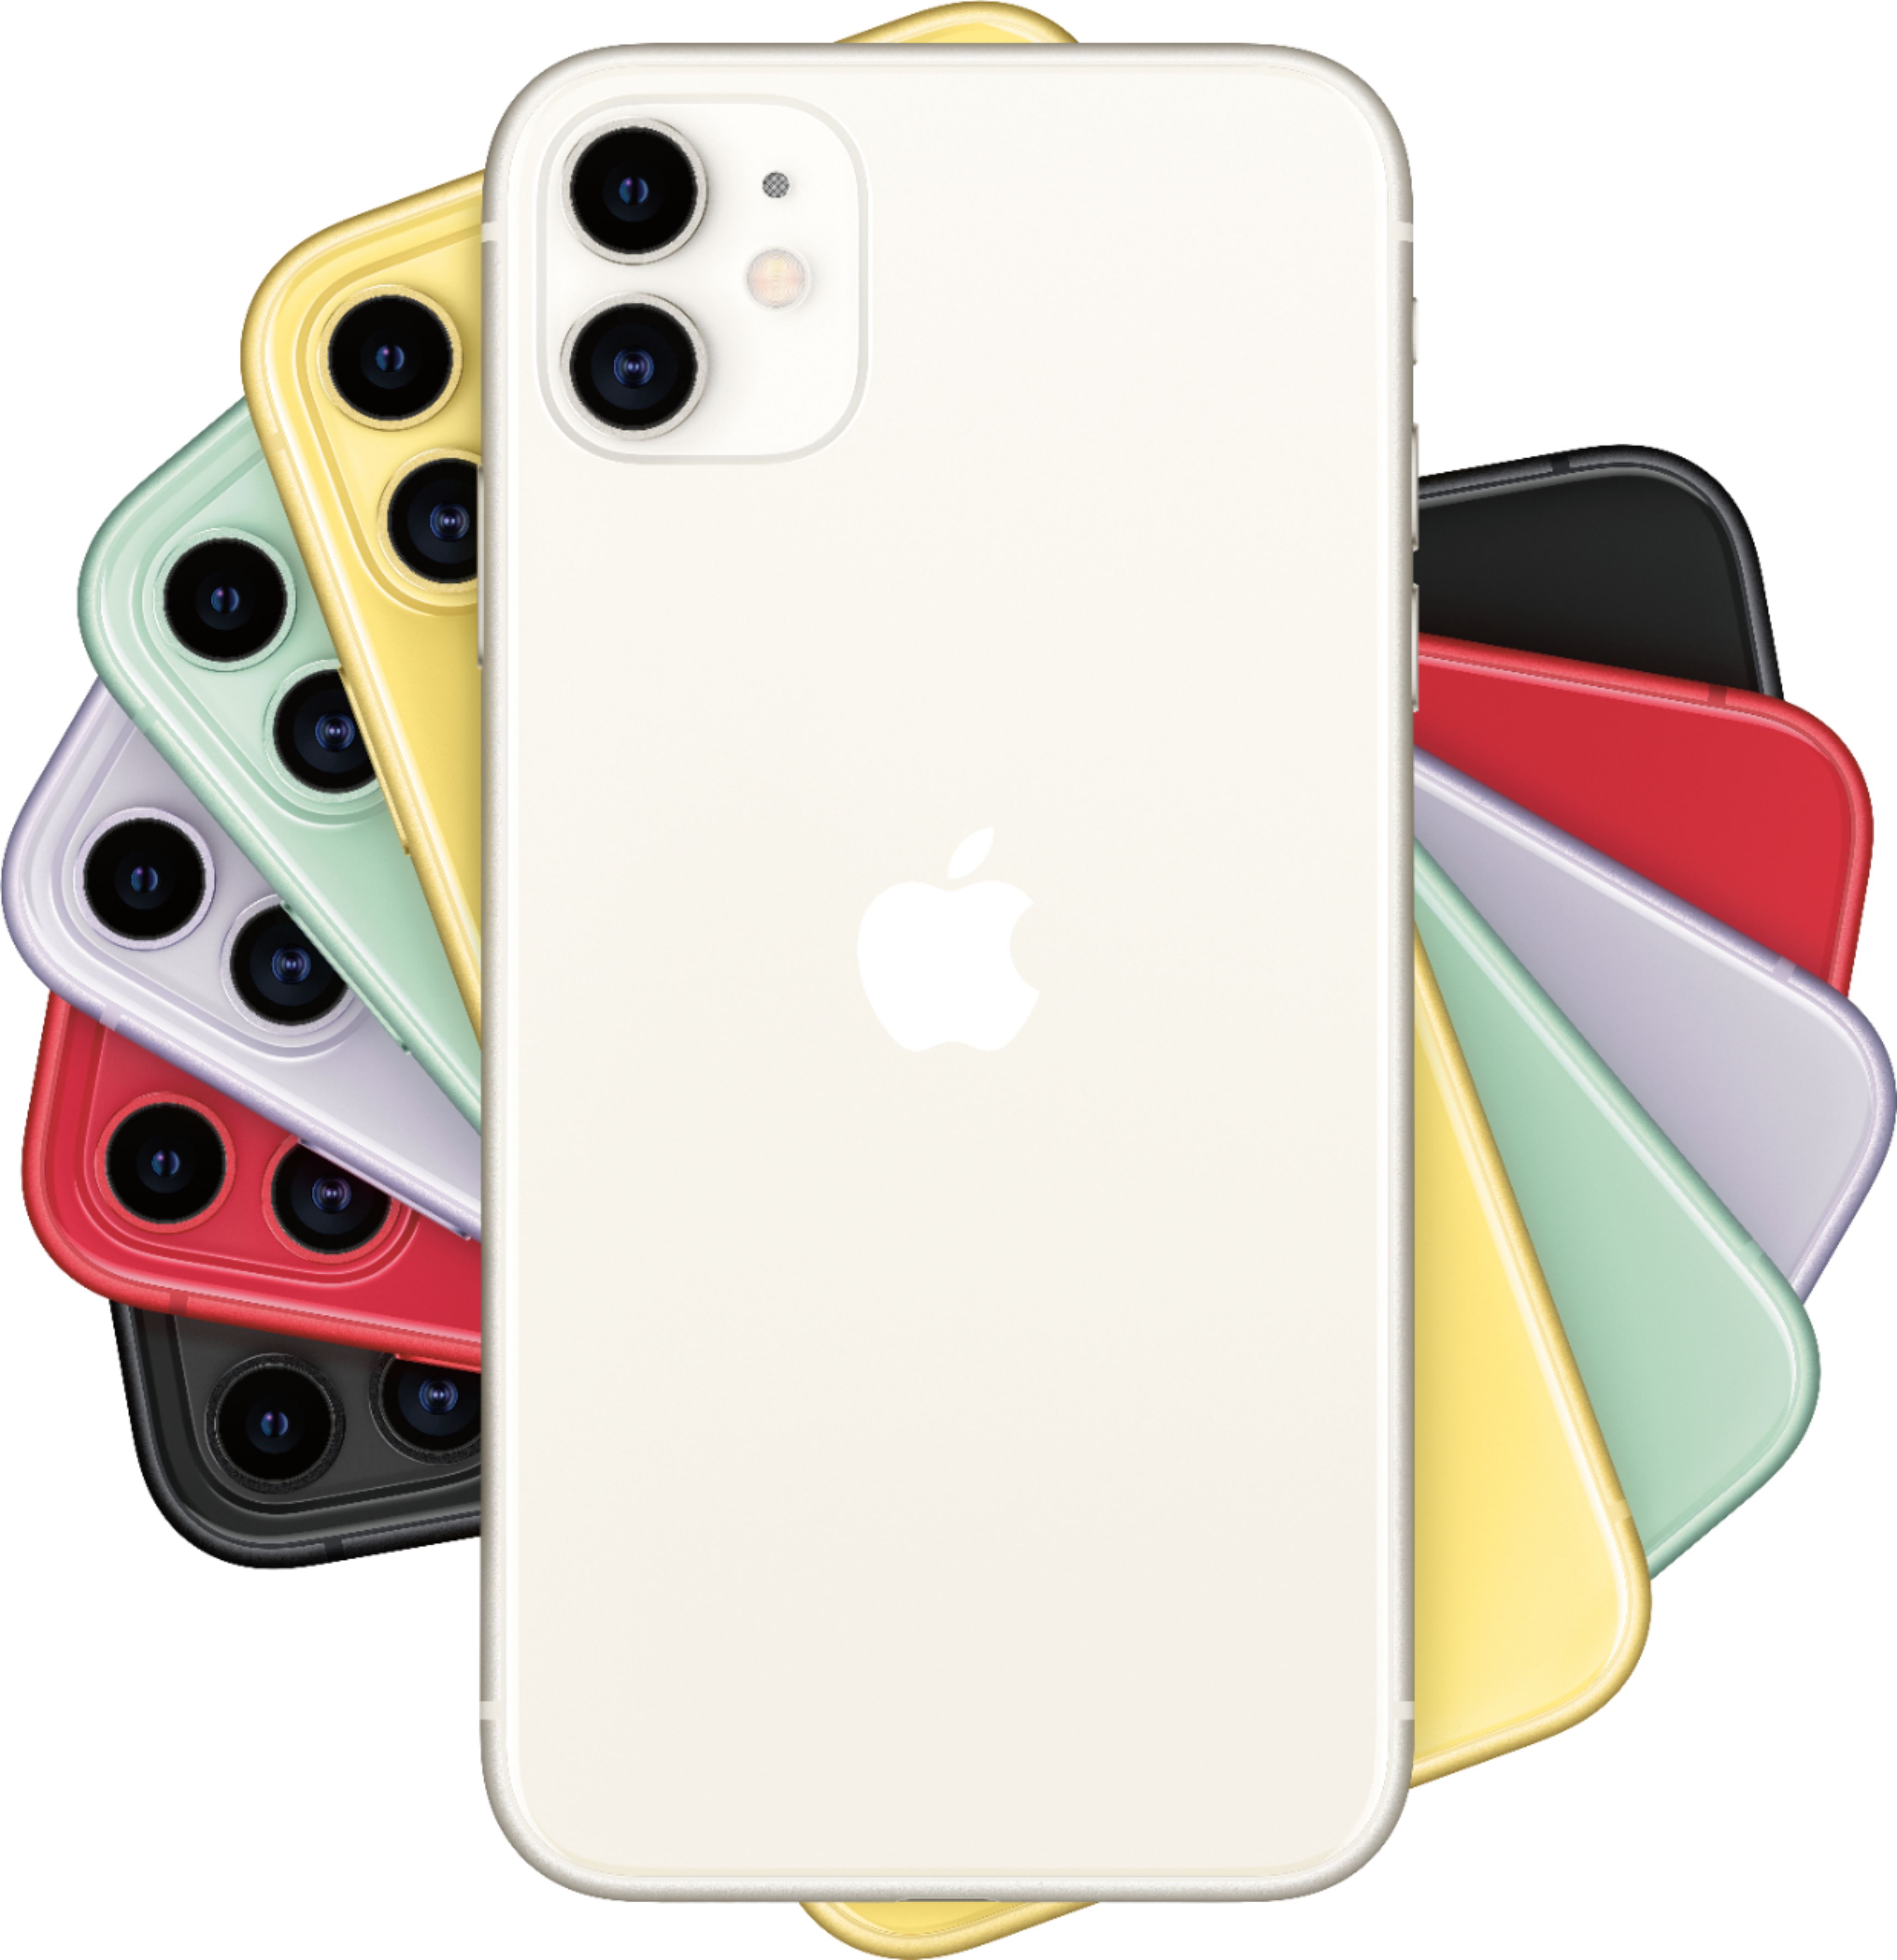 iPhone 11 256GB - White - Unlocked